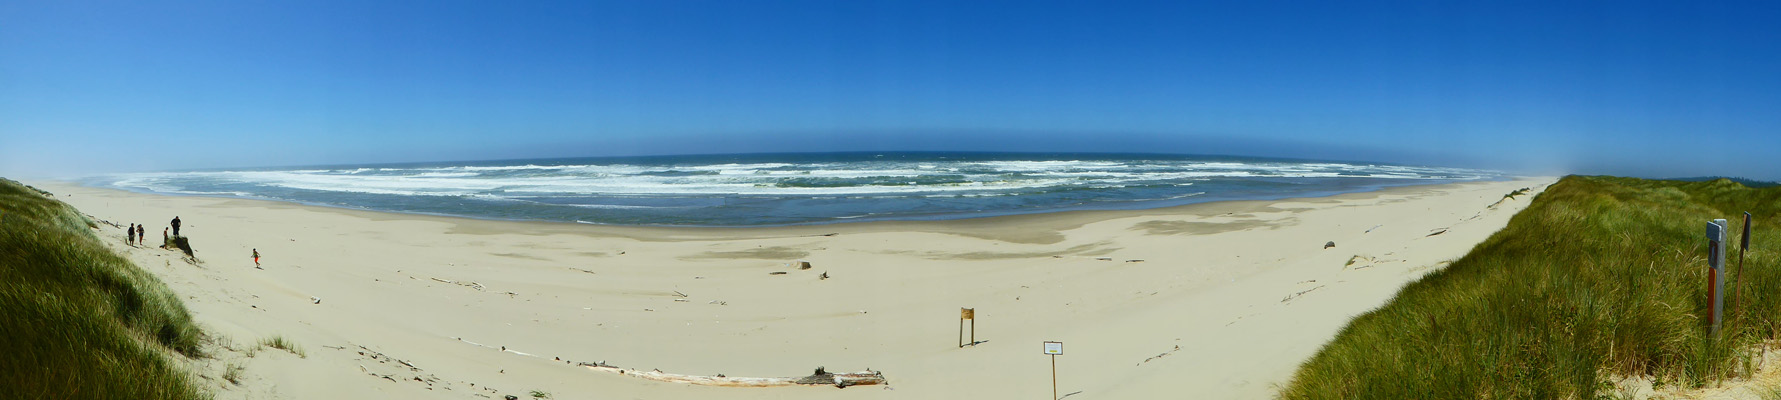 Taylor Dunes Pacific Ocean